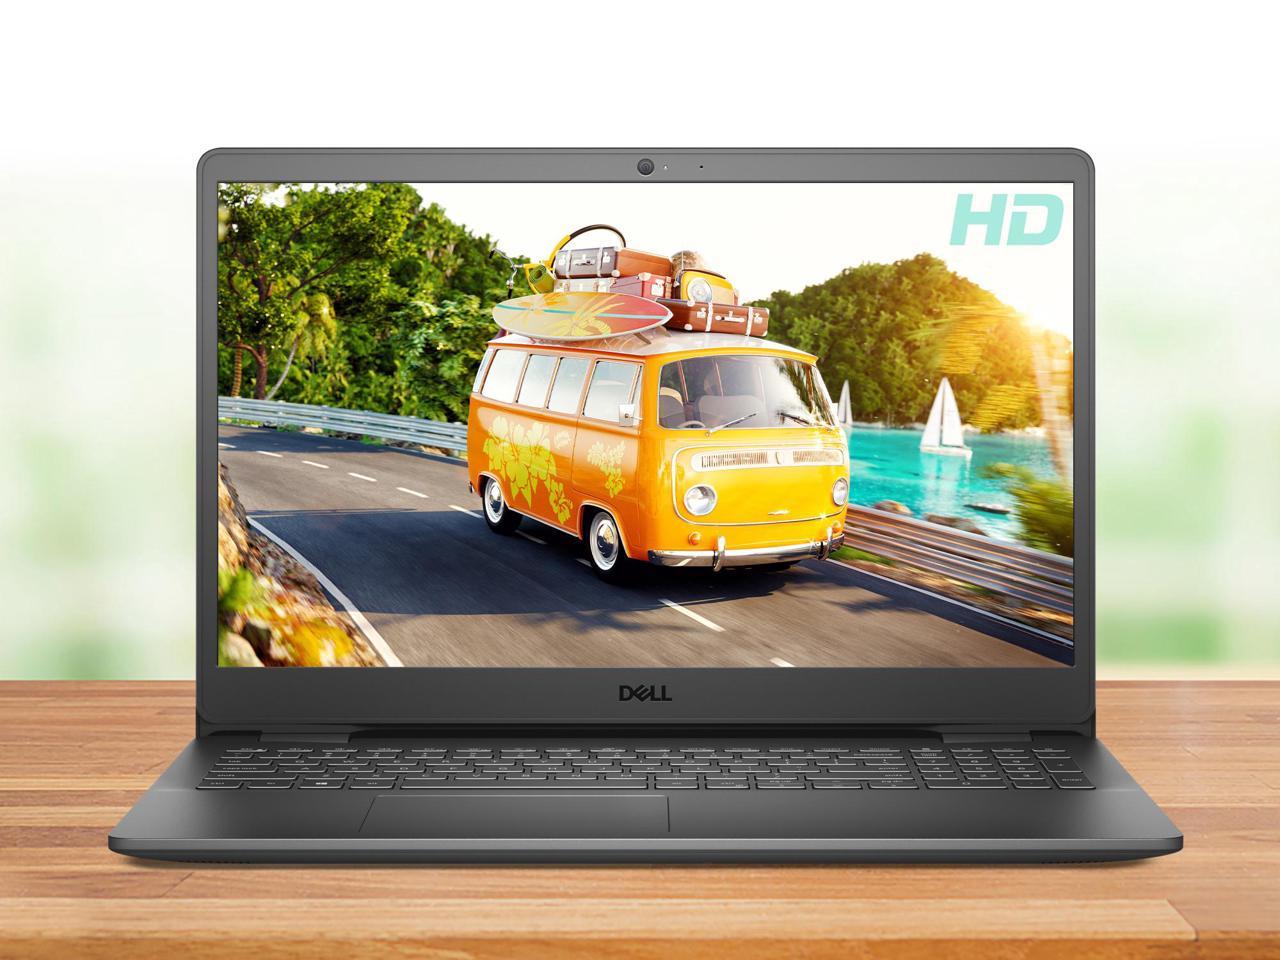 Dell Inspiron 3502 Notebook, 15.6" HD Display, Intel Pentium Silver